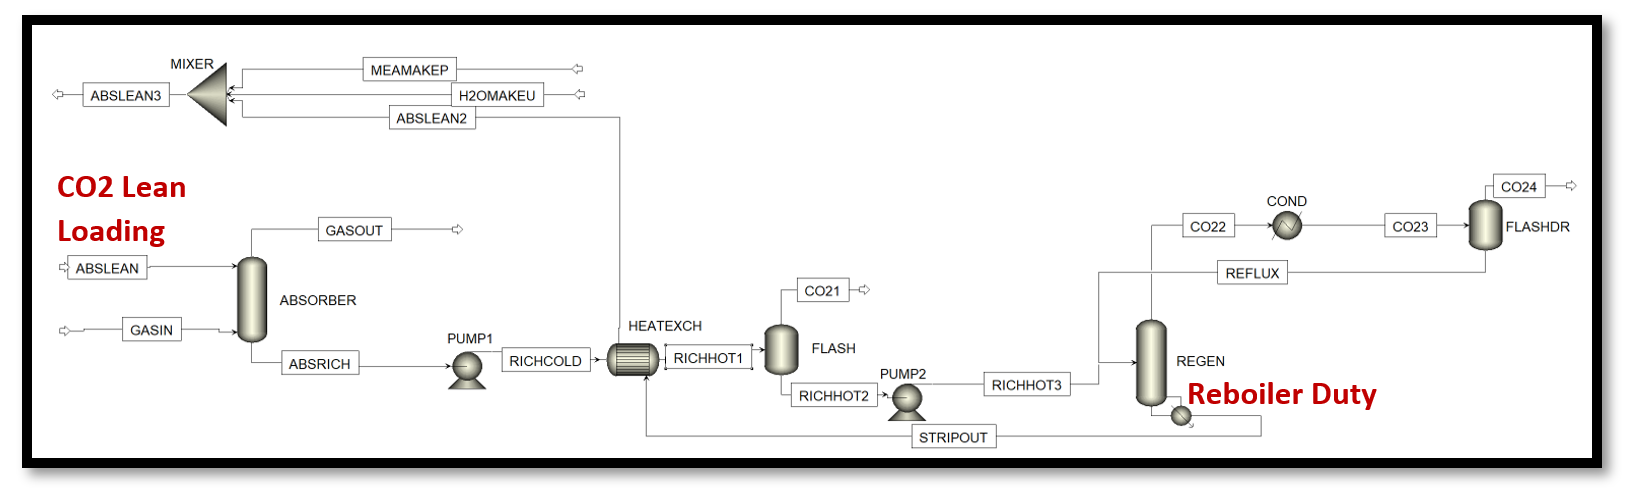 Figure 15: MEA Carbon Capture System